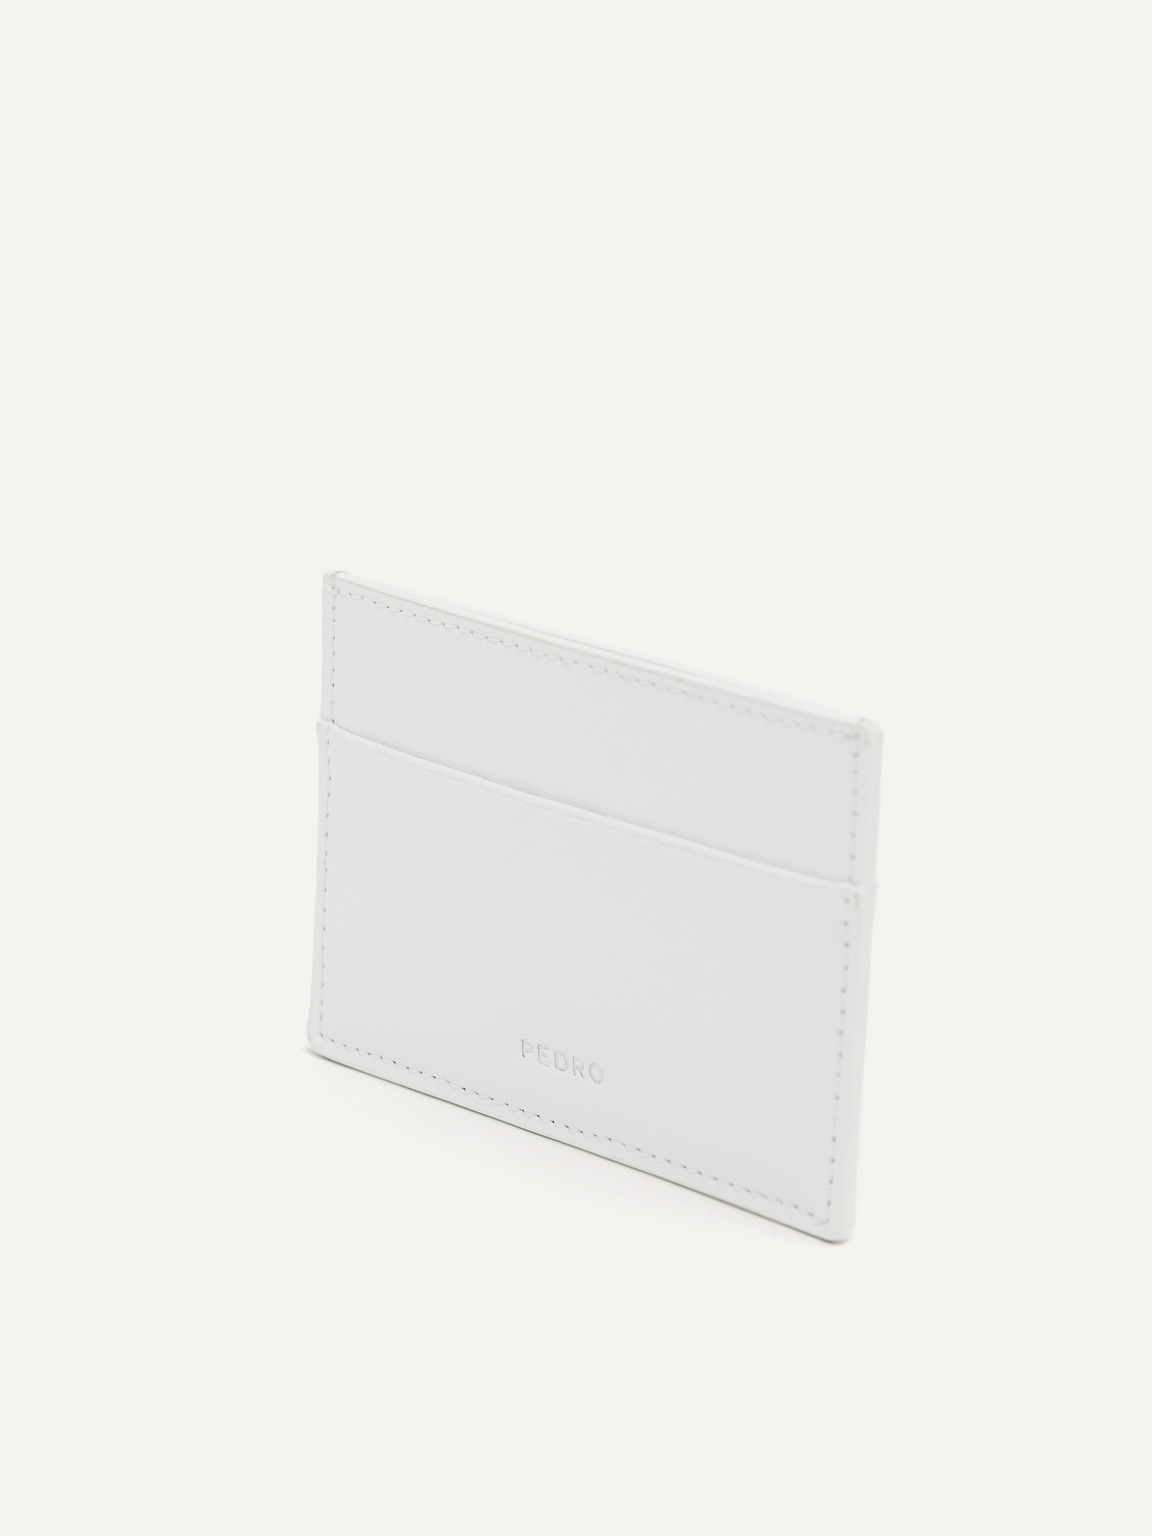 Cris-Cross Pattern Leather Cardholder, White